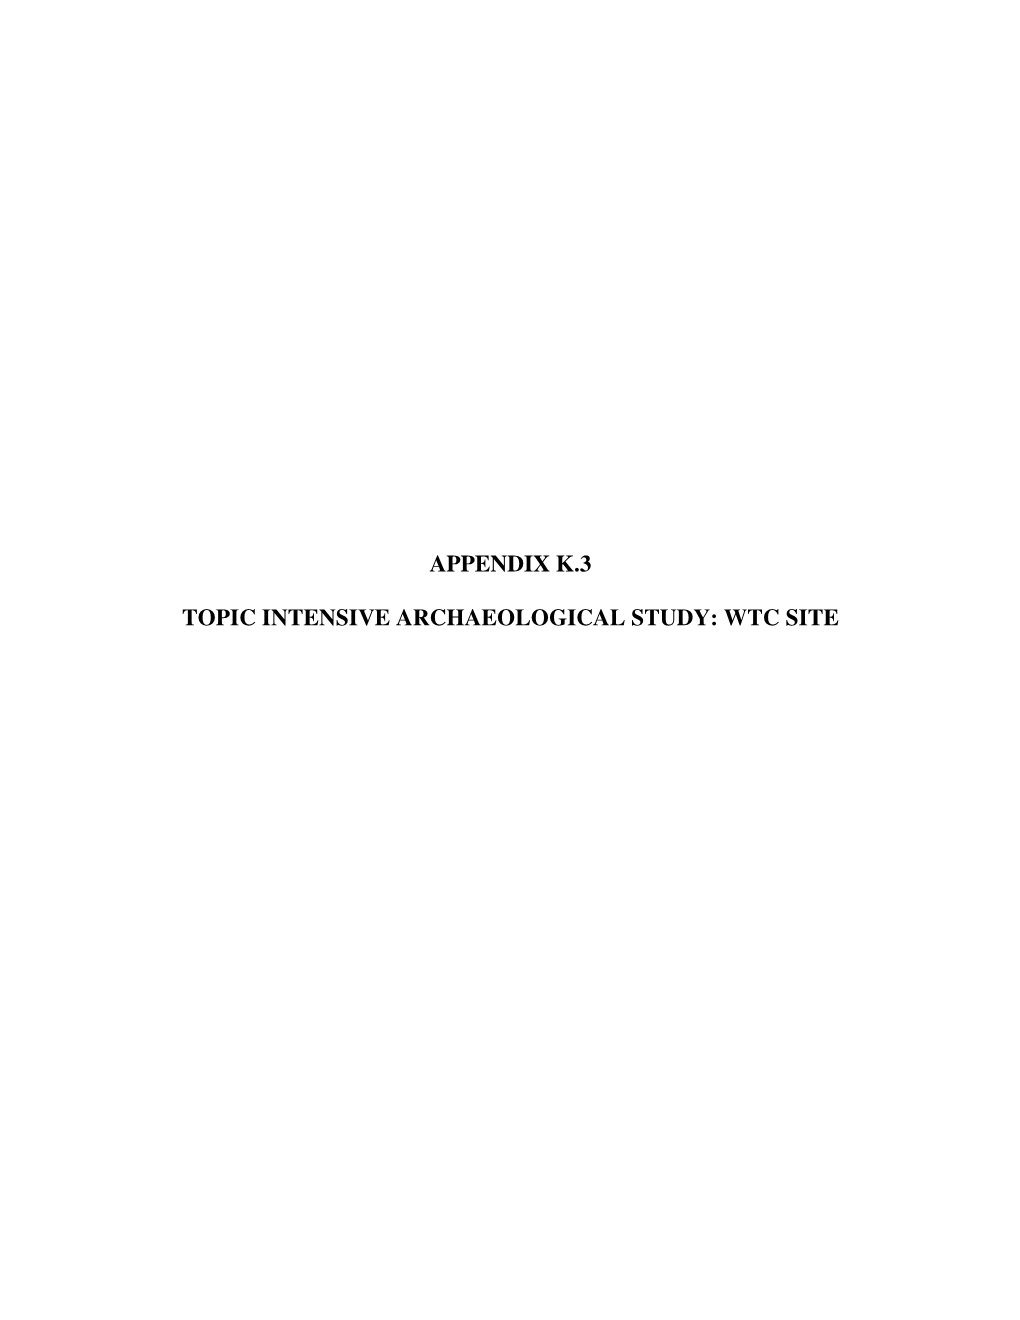 Appendix K.3 Topic Intensive Archaeological Study: Wtc